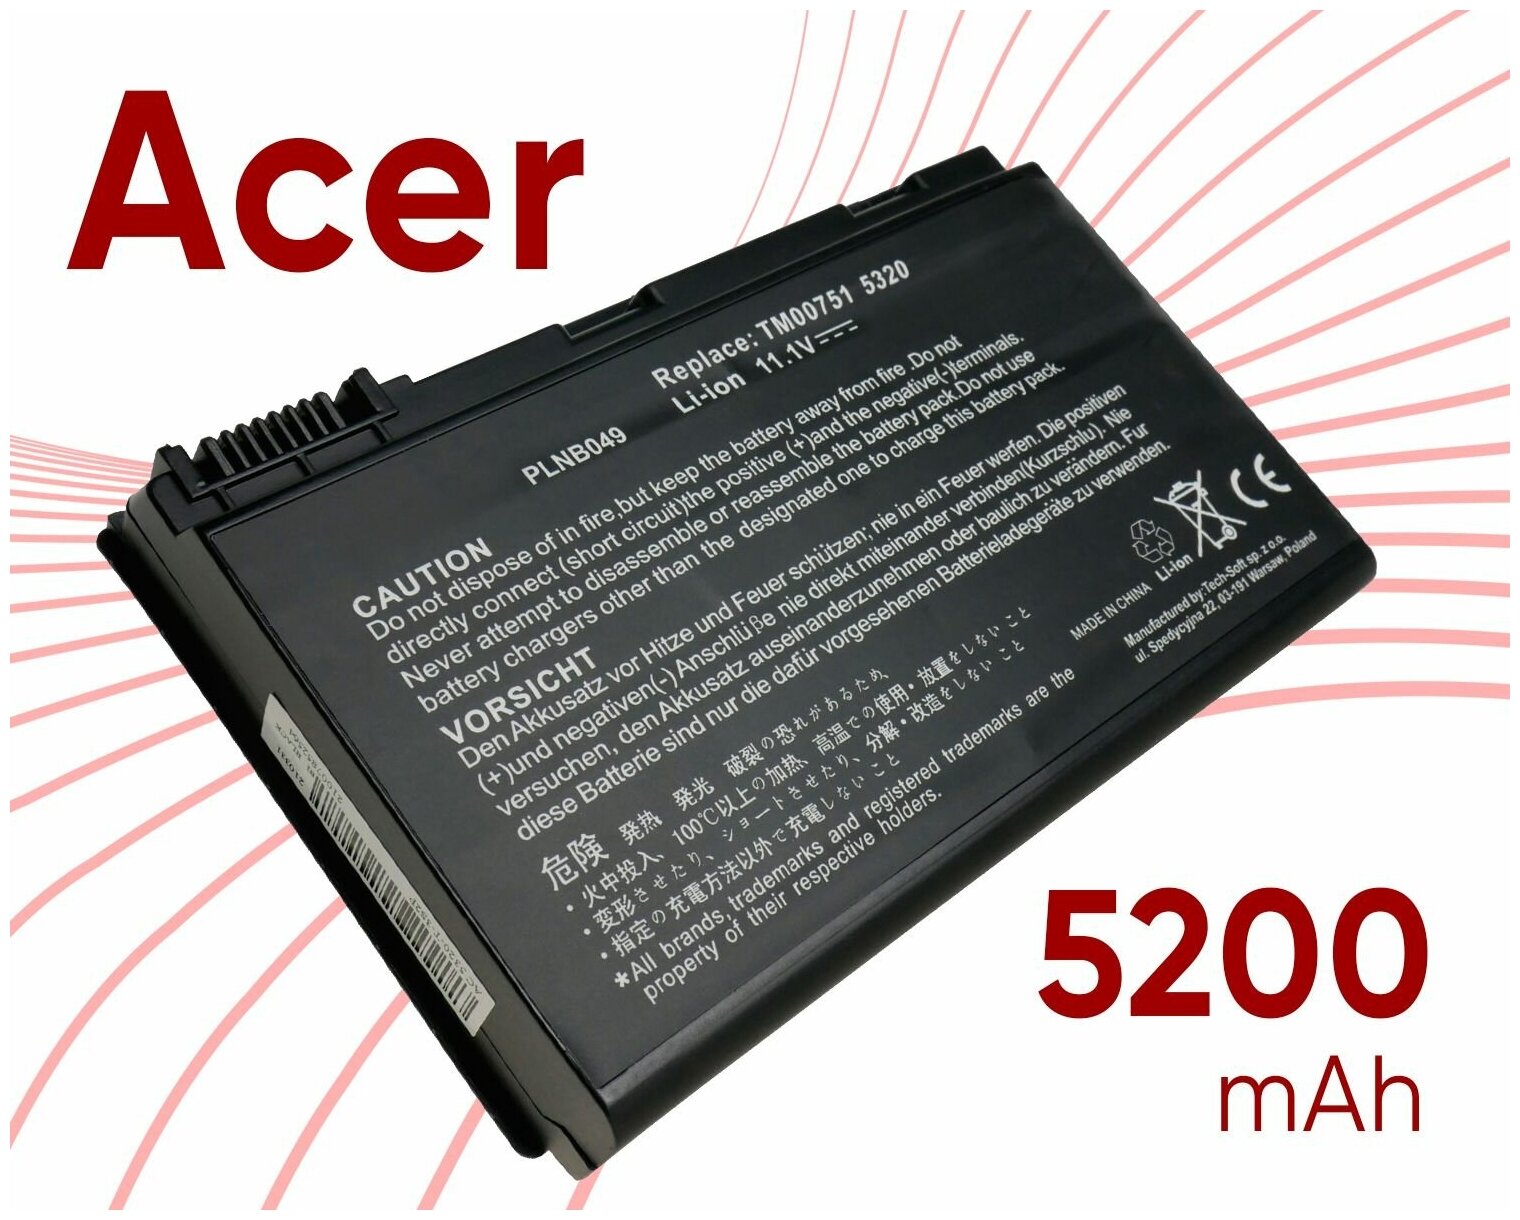 Аккумулятор Acer GRAPE32 для Extensa 5220 / Extensa 5620 / Extensa 5620Z / Extensa 5630G 5620G / TravelMate 5320 5720 5720G / Extensa 5210 / 7620G